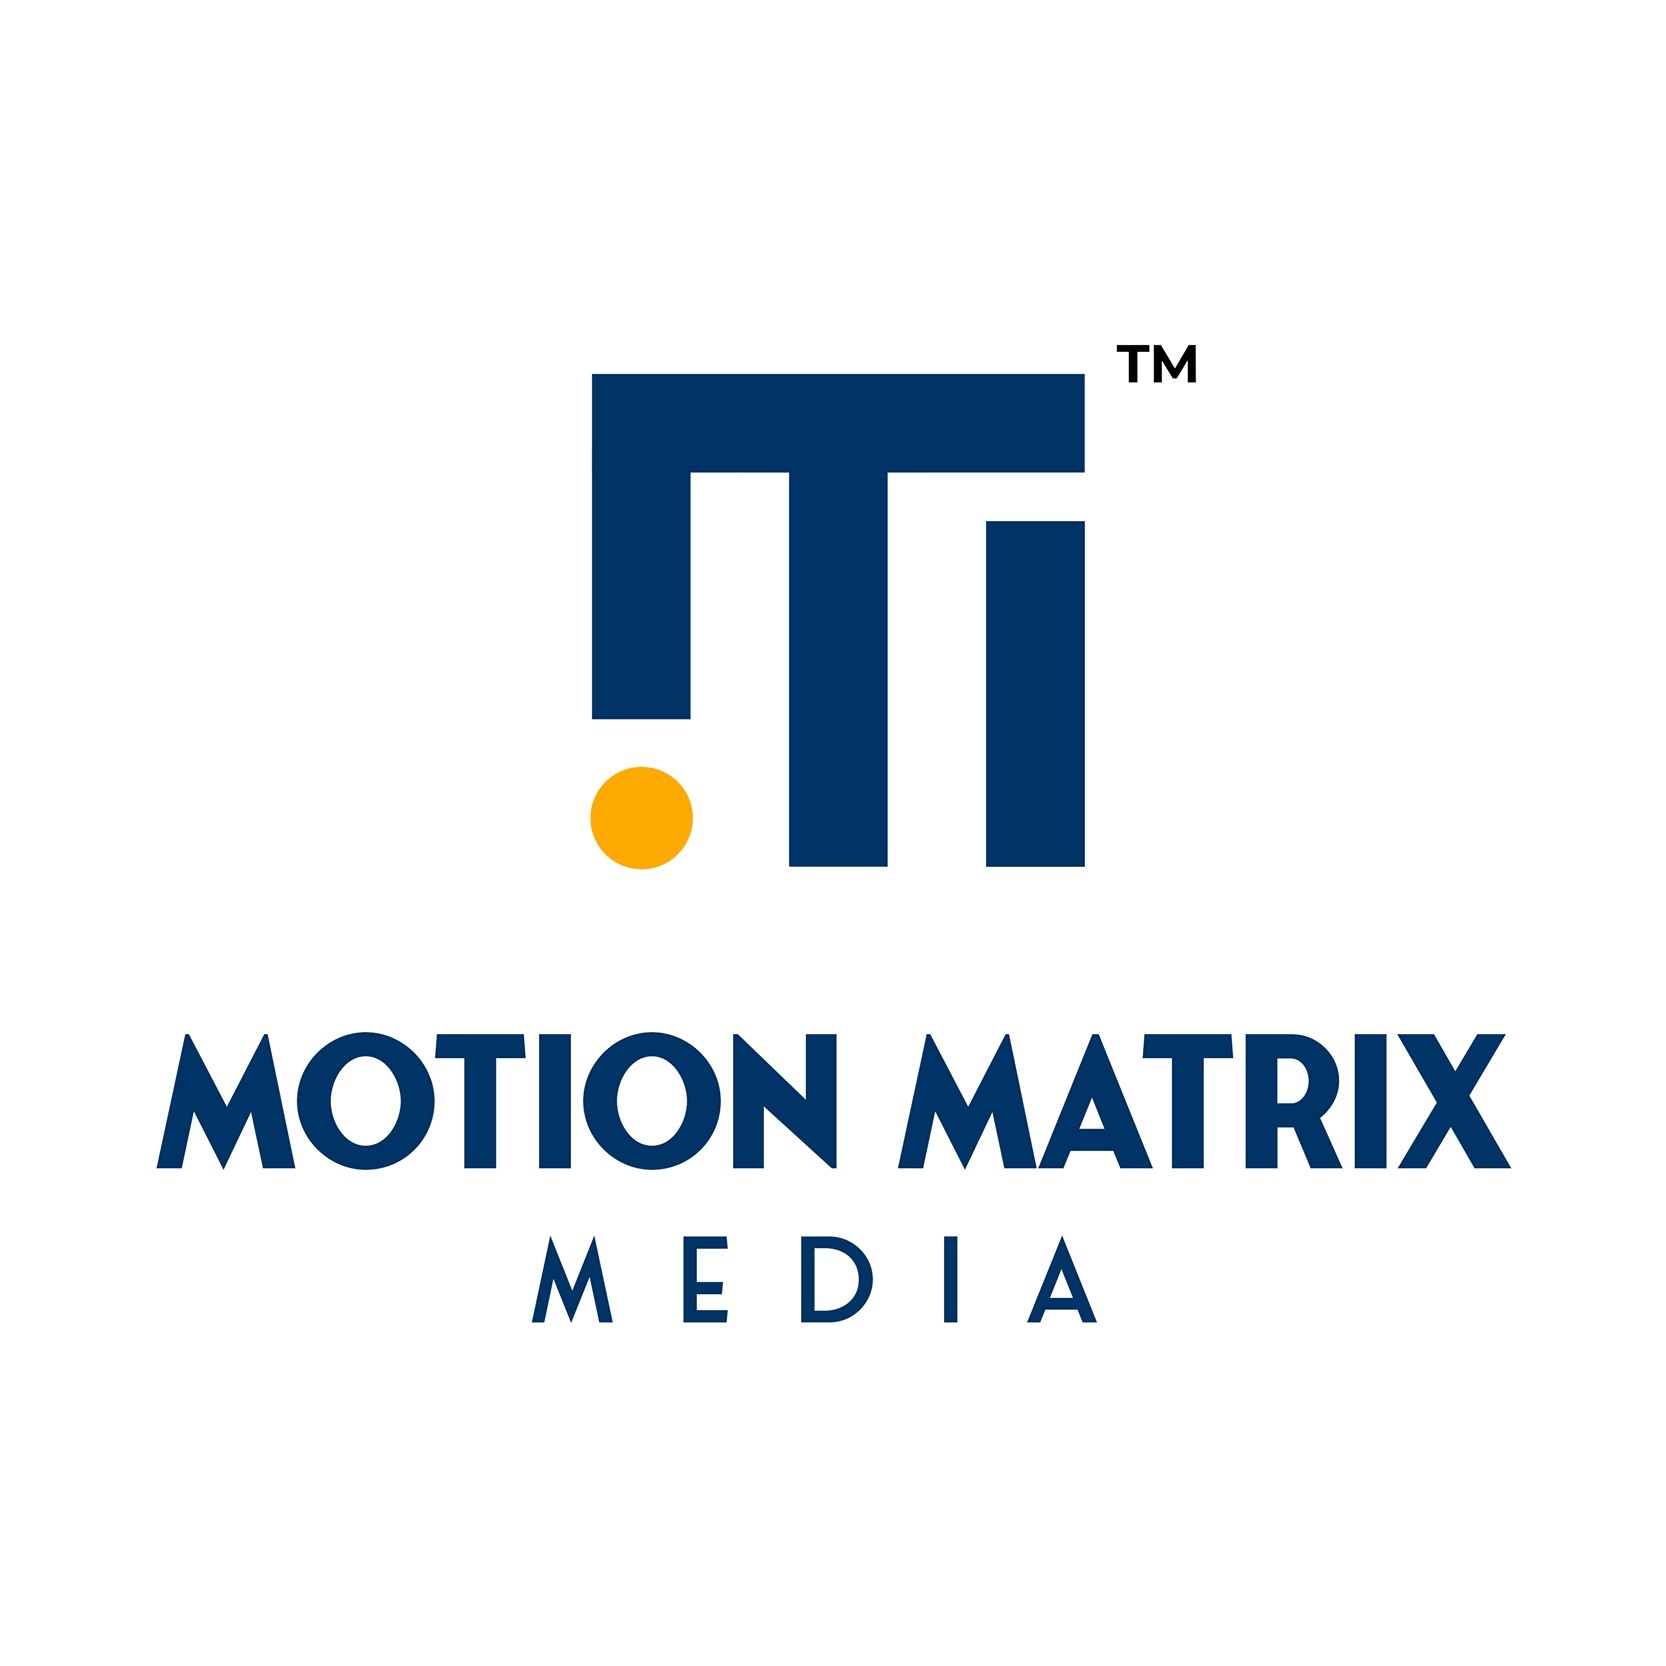 Motion Matrix Media|IT Services|Professional Services